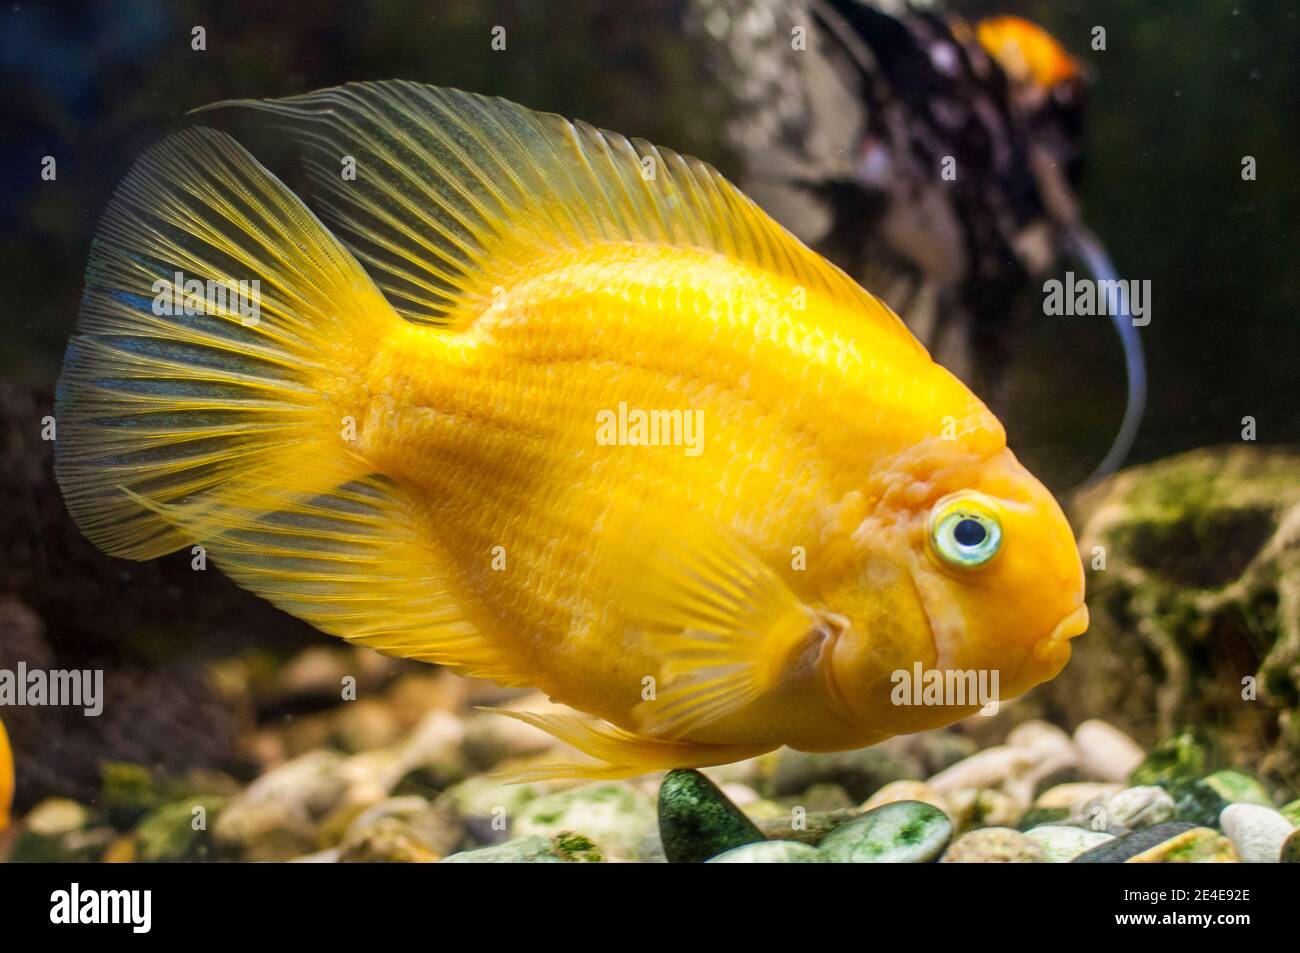 Parrot fish swimming in freshwater aquarium Stock Photo